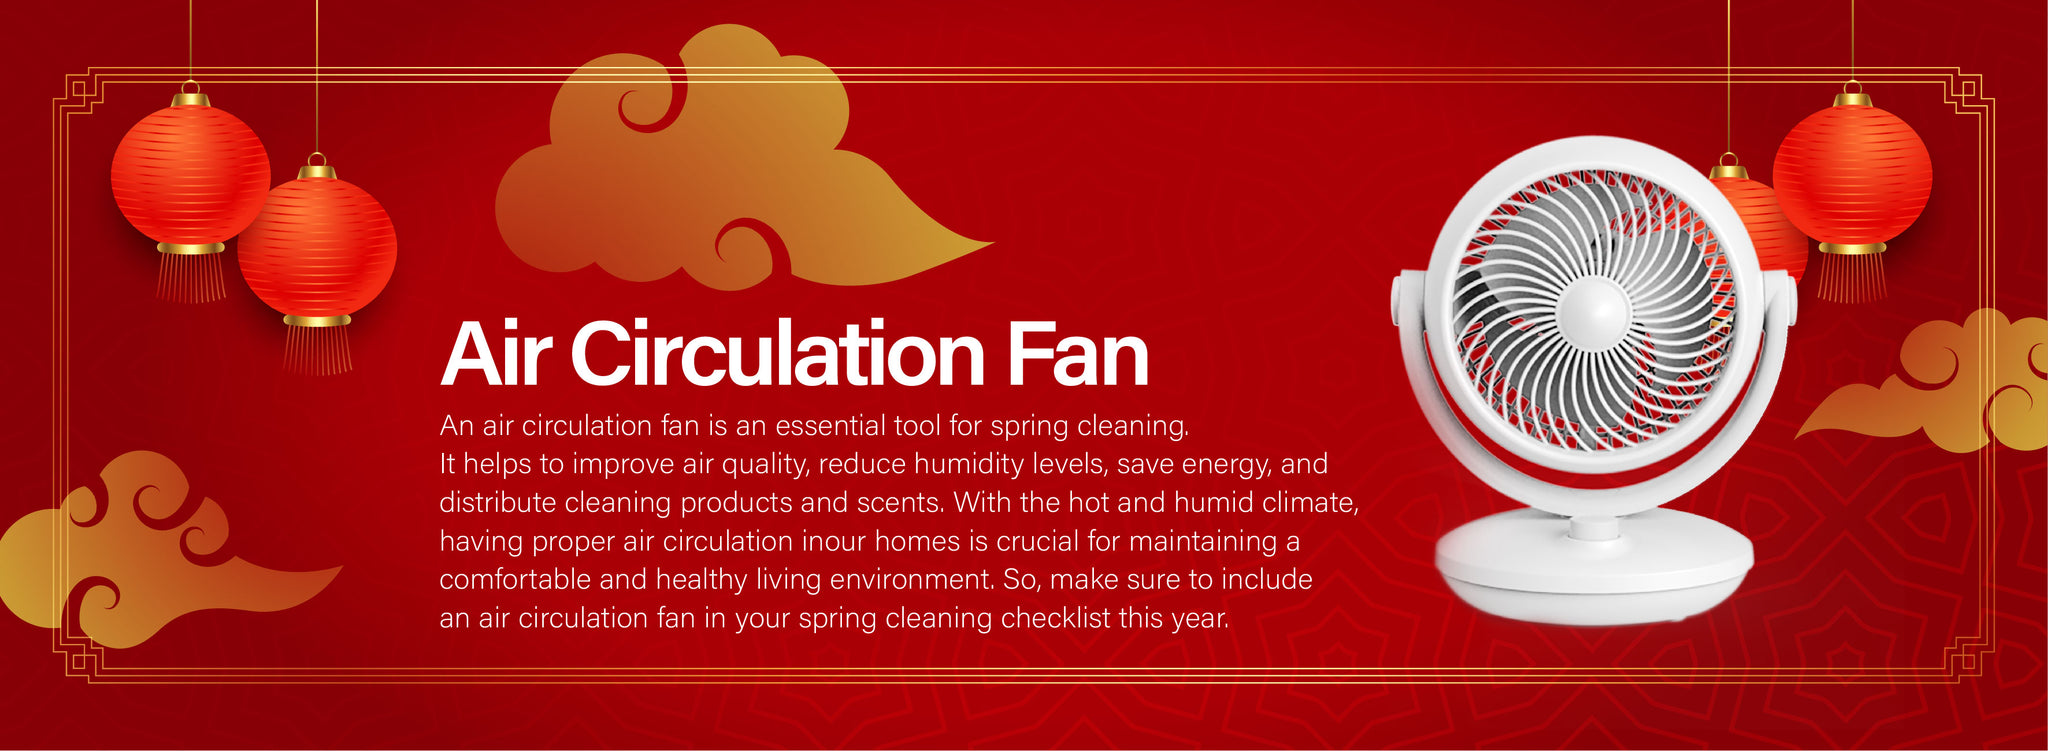 Spring cleaning essentials air circulation fan